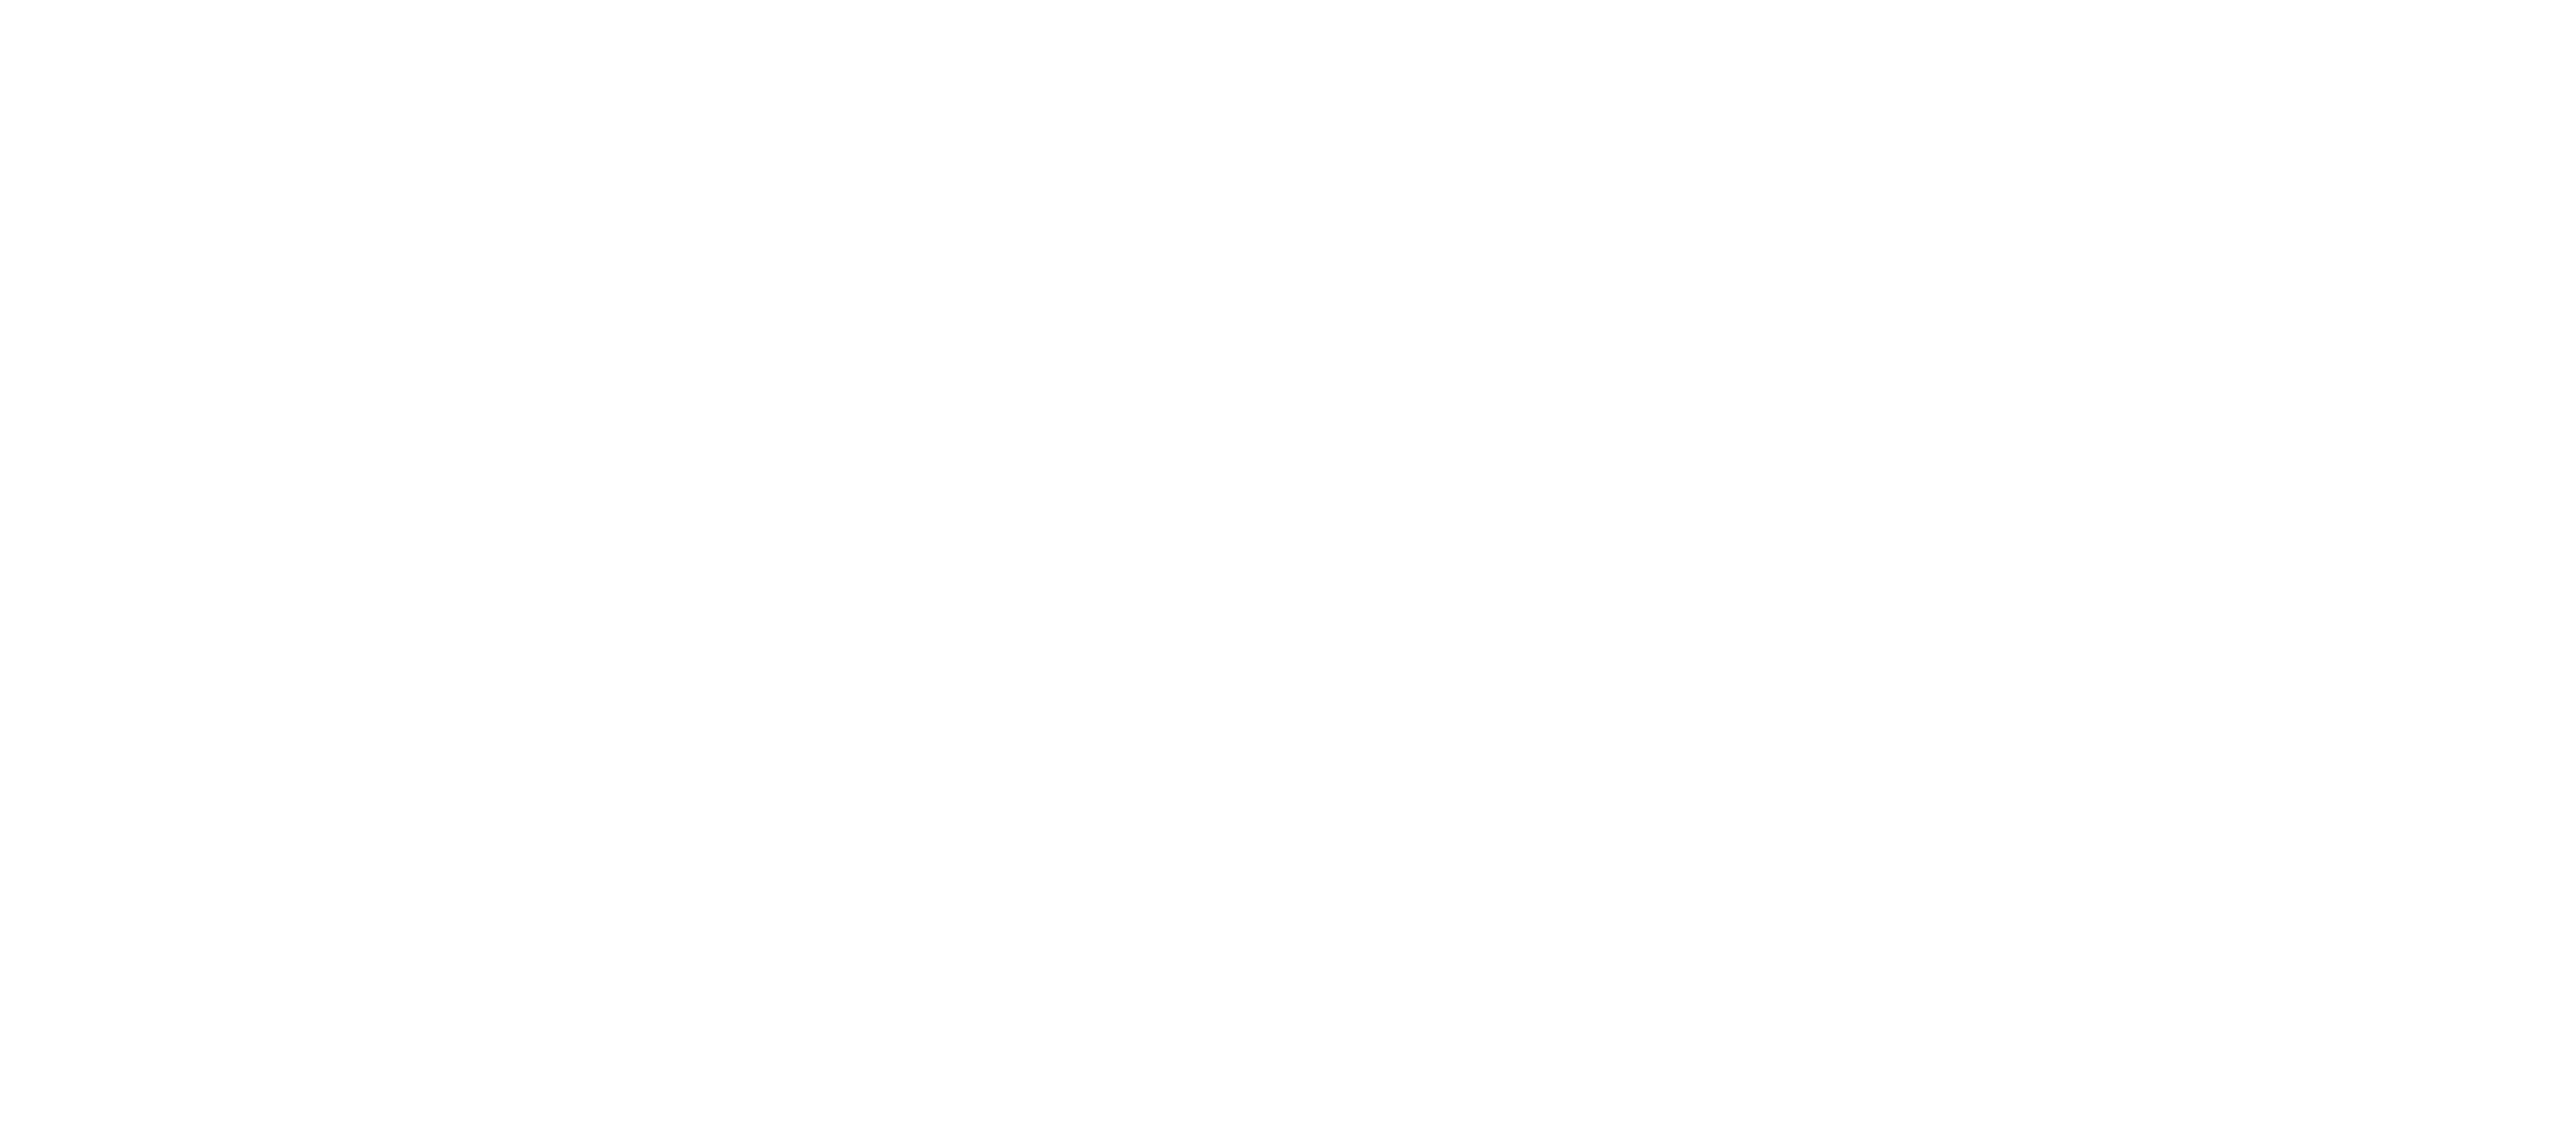 Aesthetic grid overlay